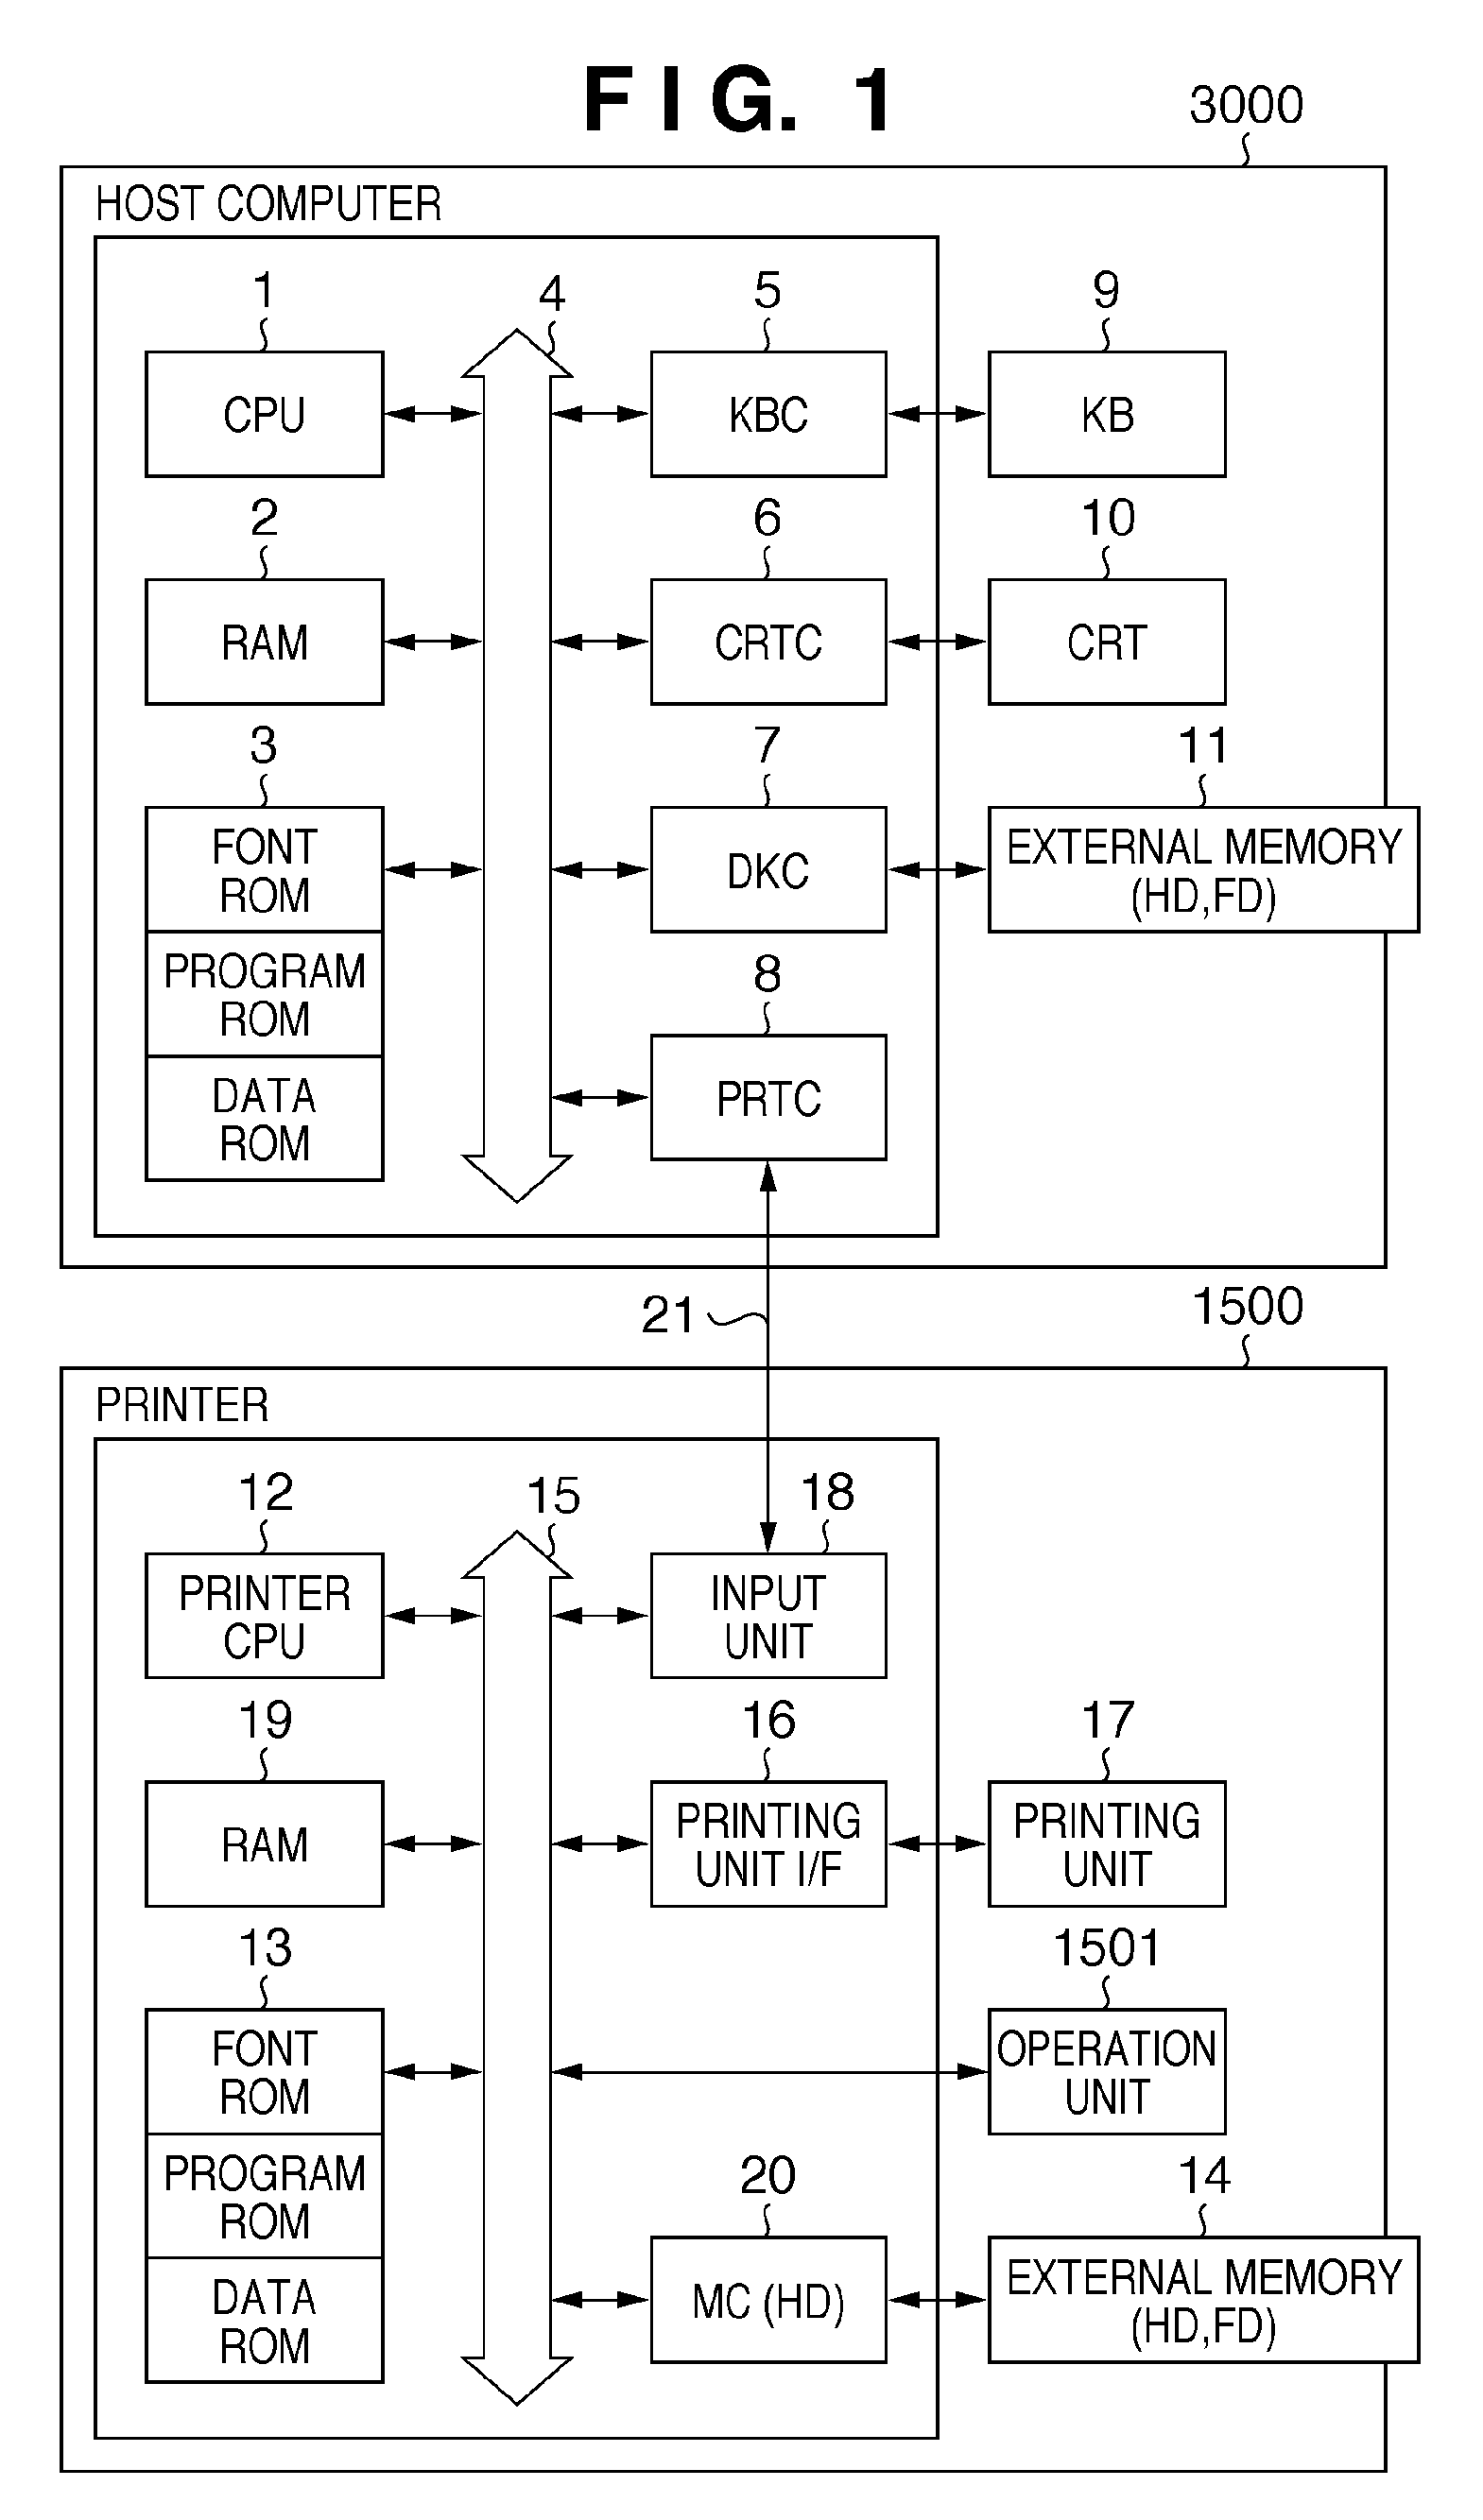 Print control apparatus, print control method, and computer-readable storage medium storing a print control program